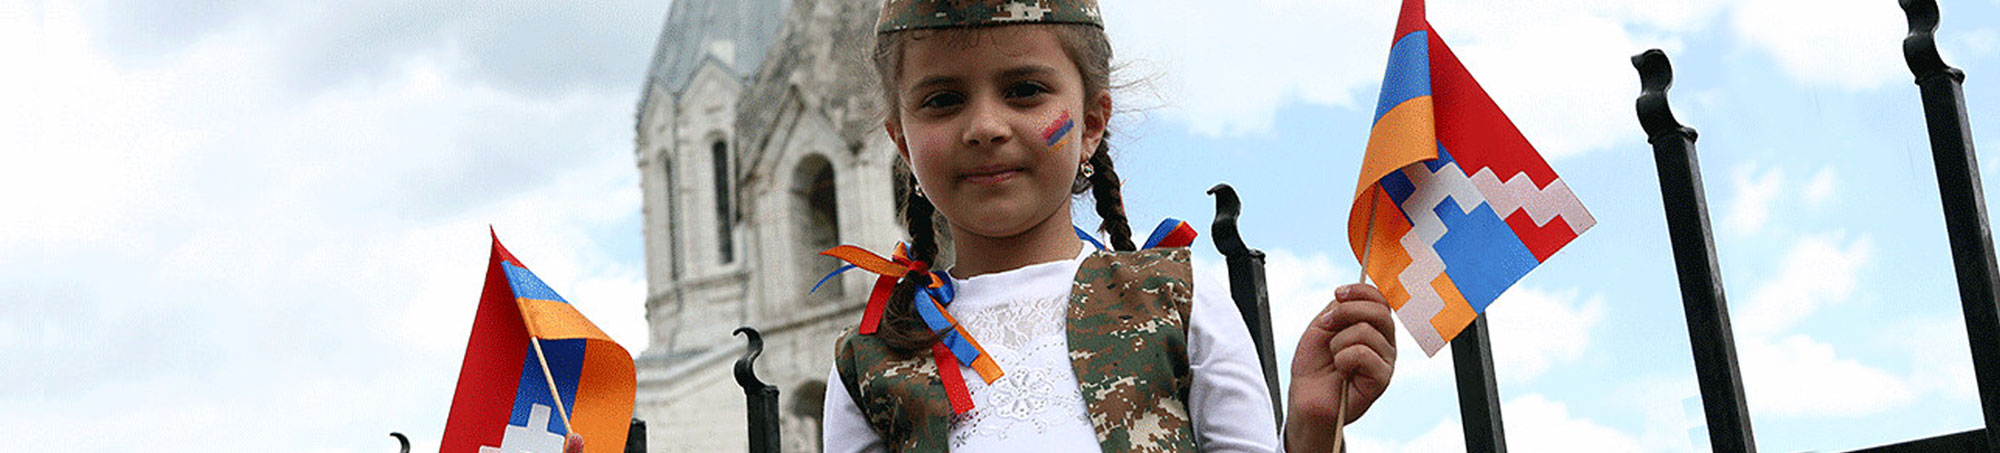 Armenian girl with Artsakh flags in Shushi. Artsakh (Nagorno Karabakh)